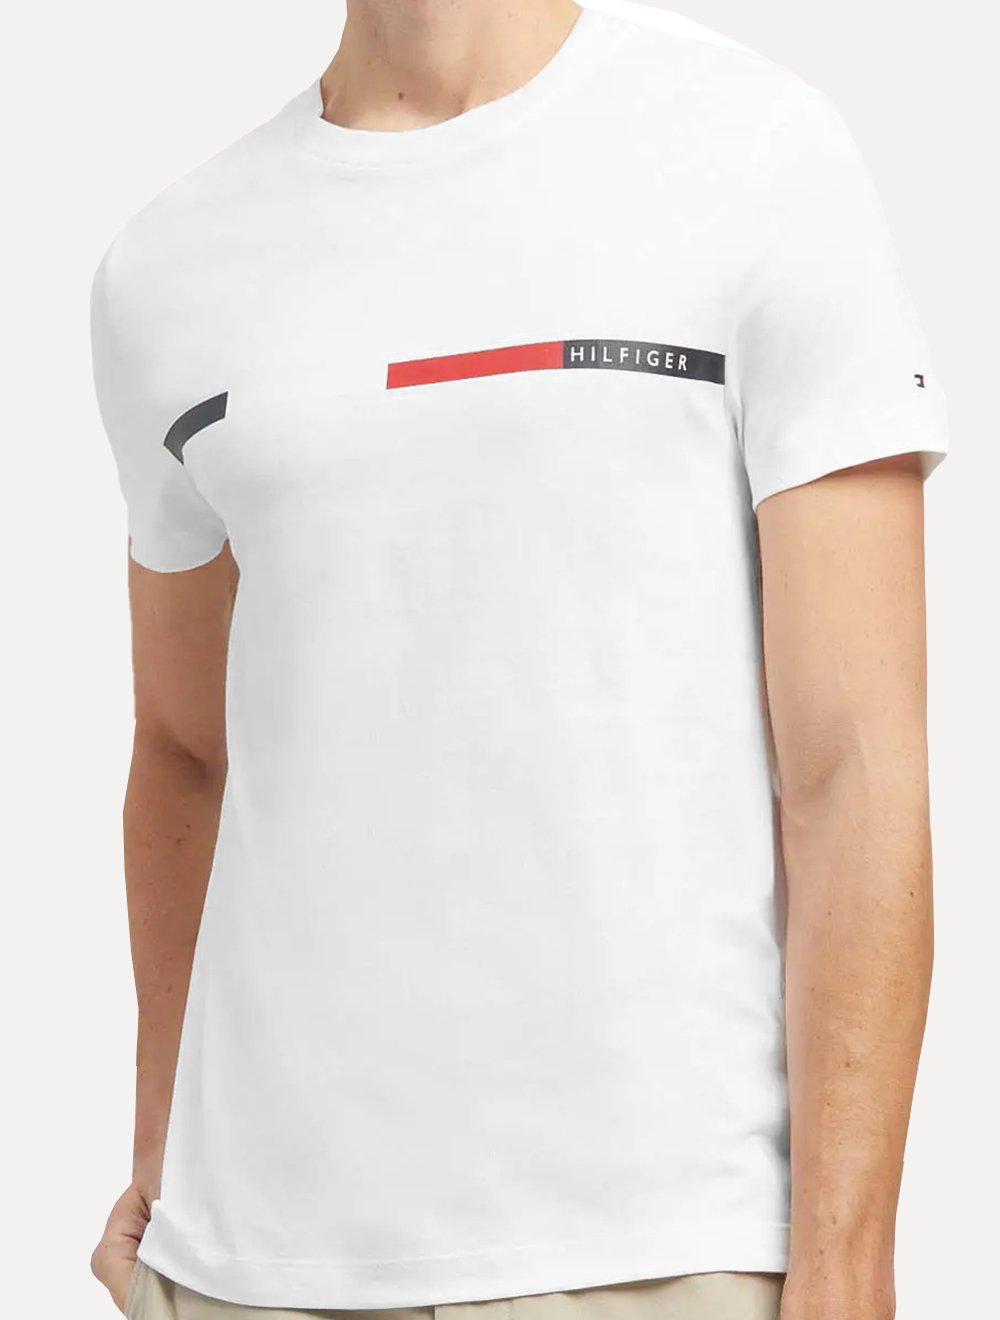 Camiseta Tommy Hilfiger Masculina Chest Bar Graphic Branca